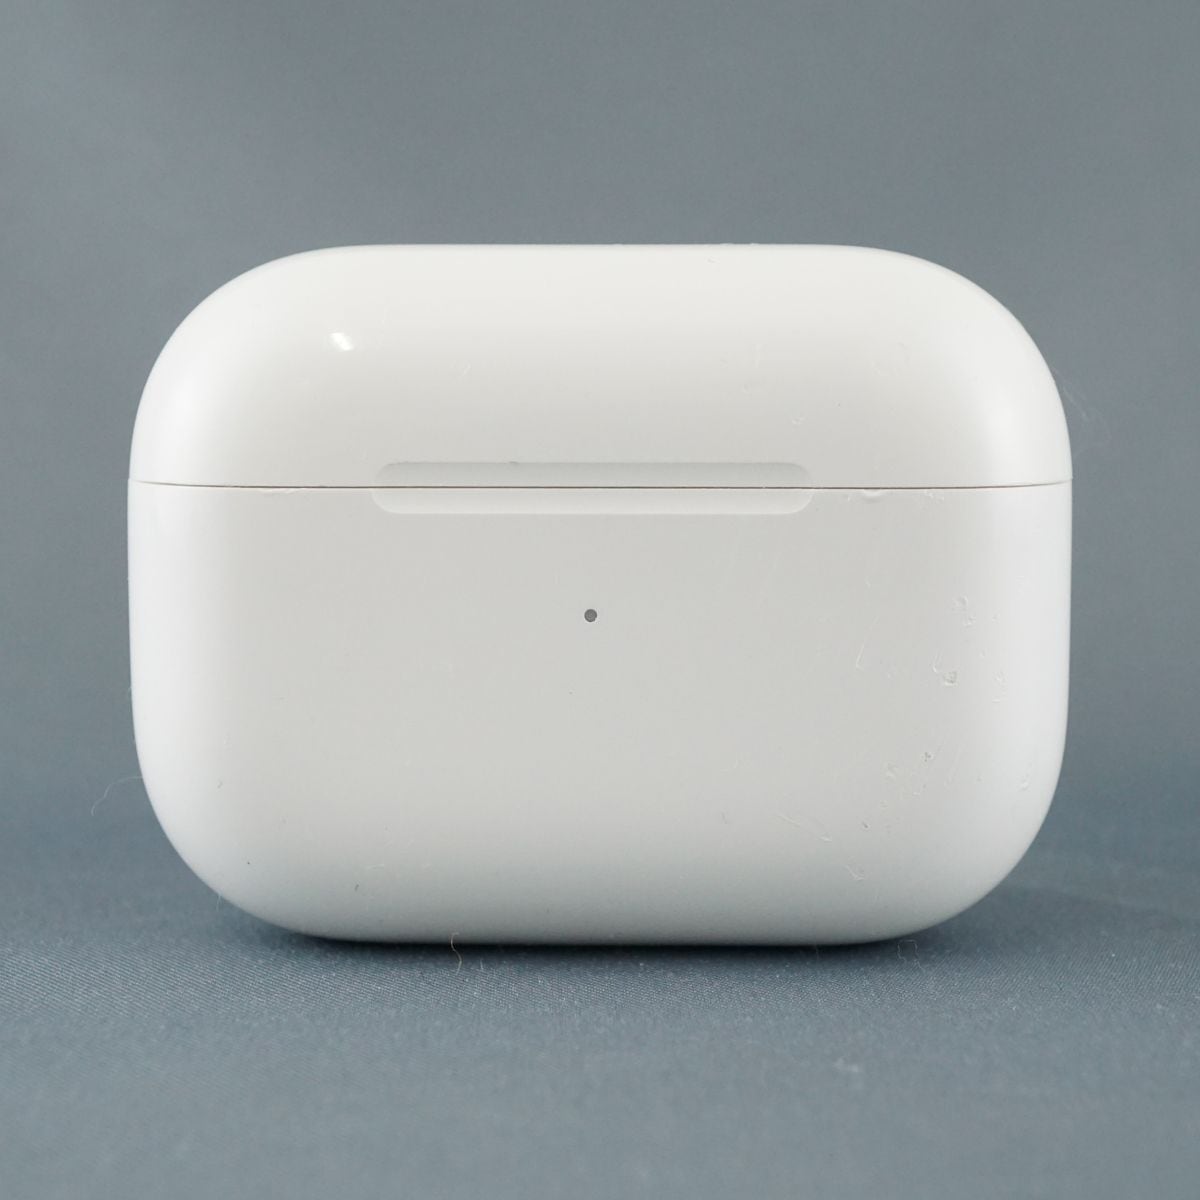 Apple AirPods  Pro エアーポッズ　充電ケースのみ商品状態